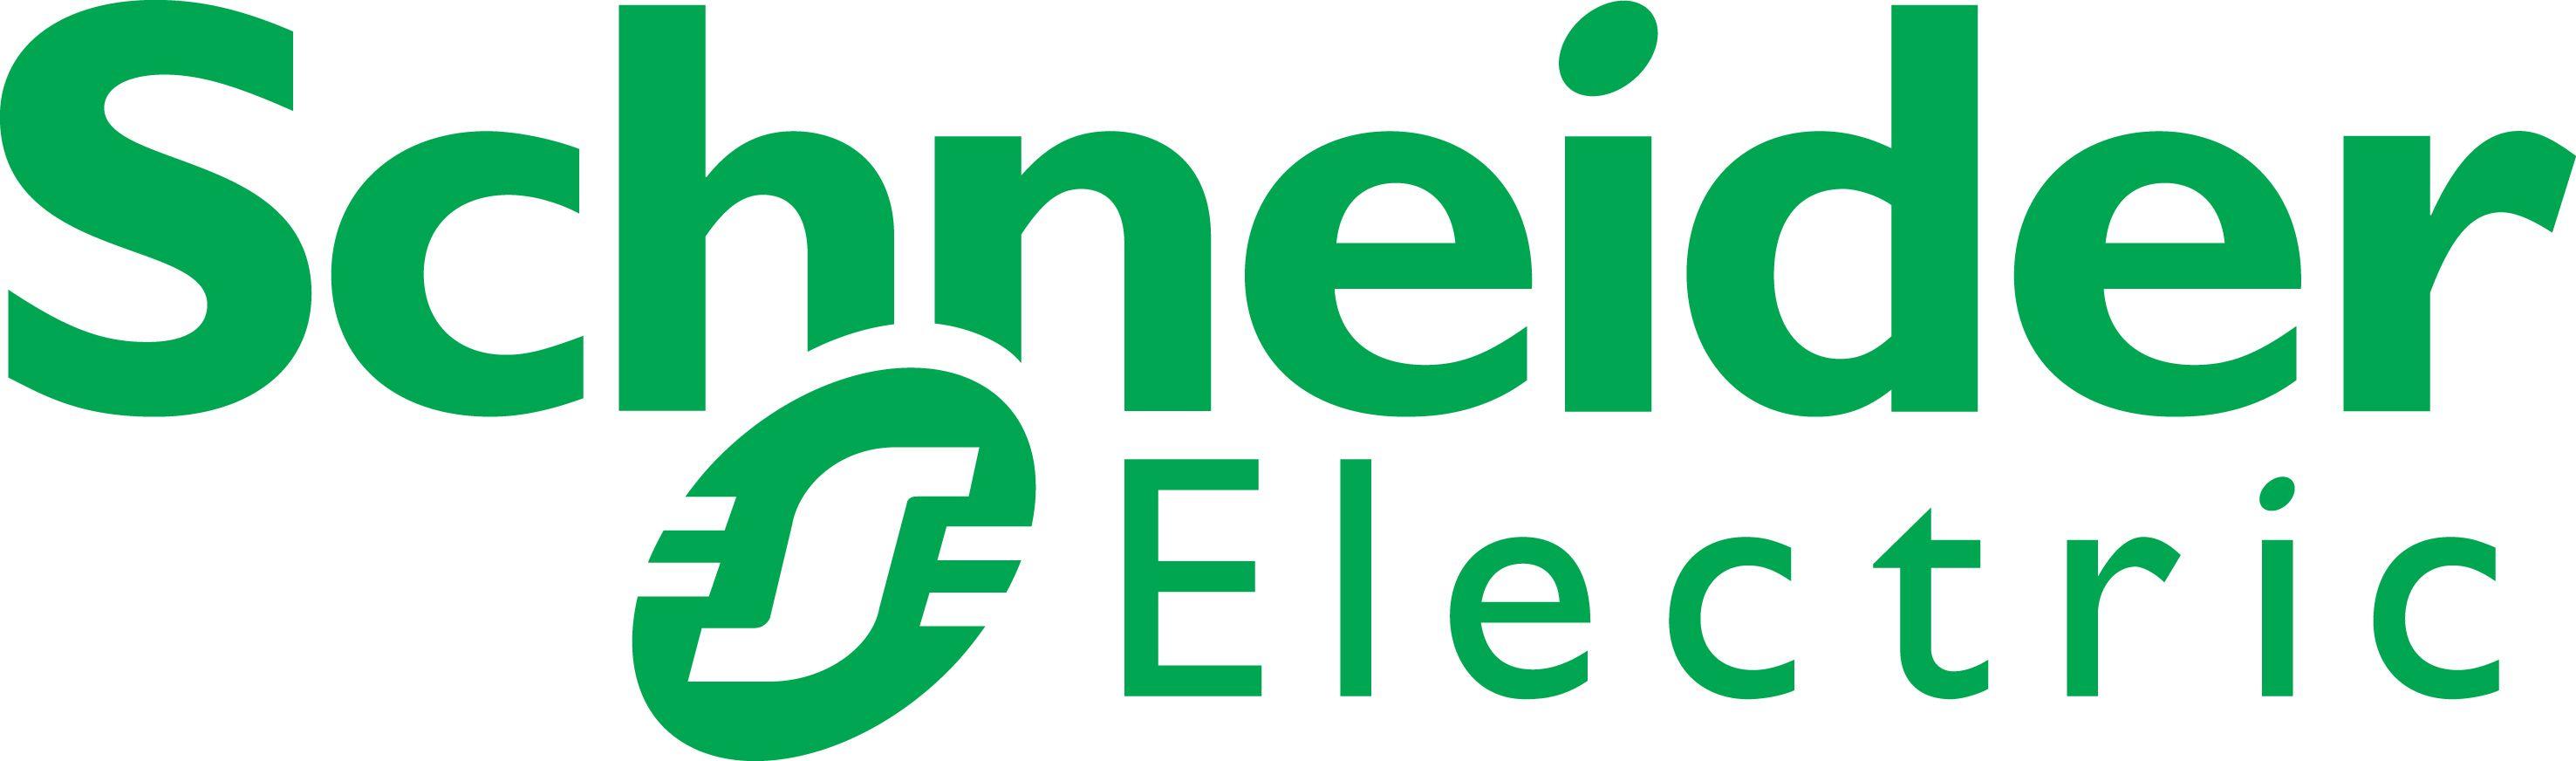 Schneider Logo - File:Schneider-Electric-Logo.jpg - Wikimedia Commons